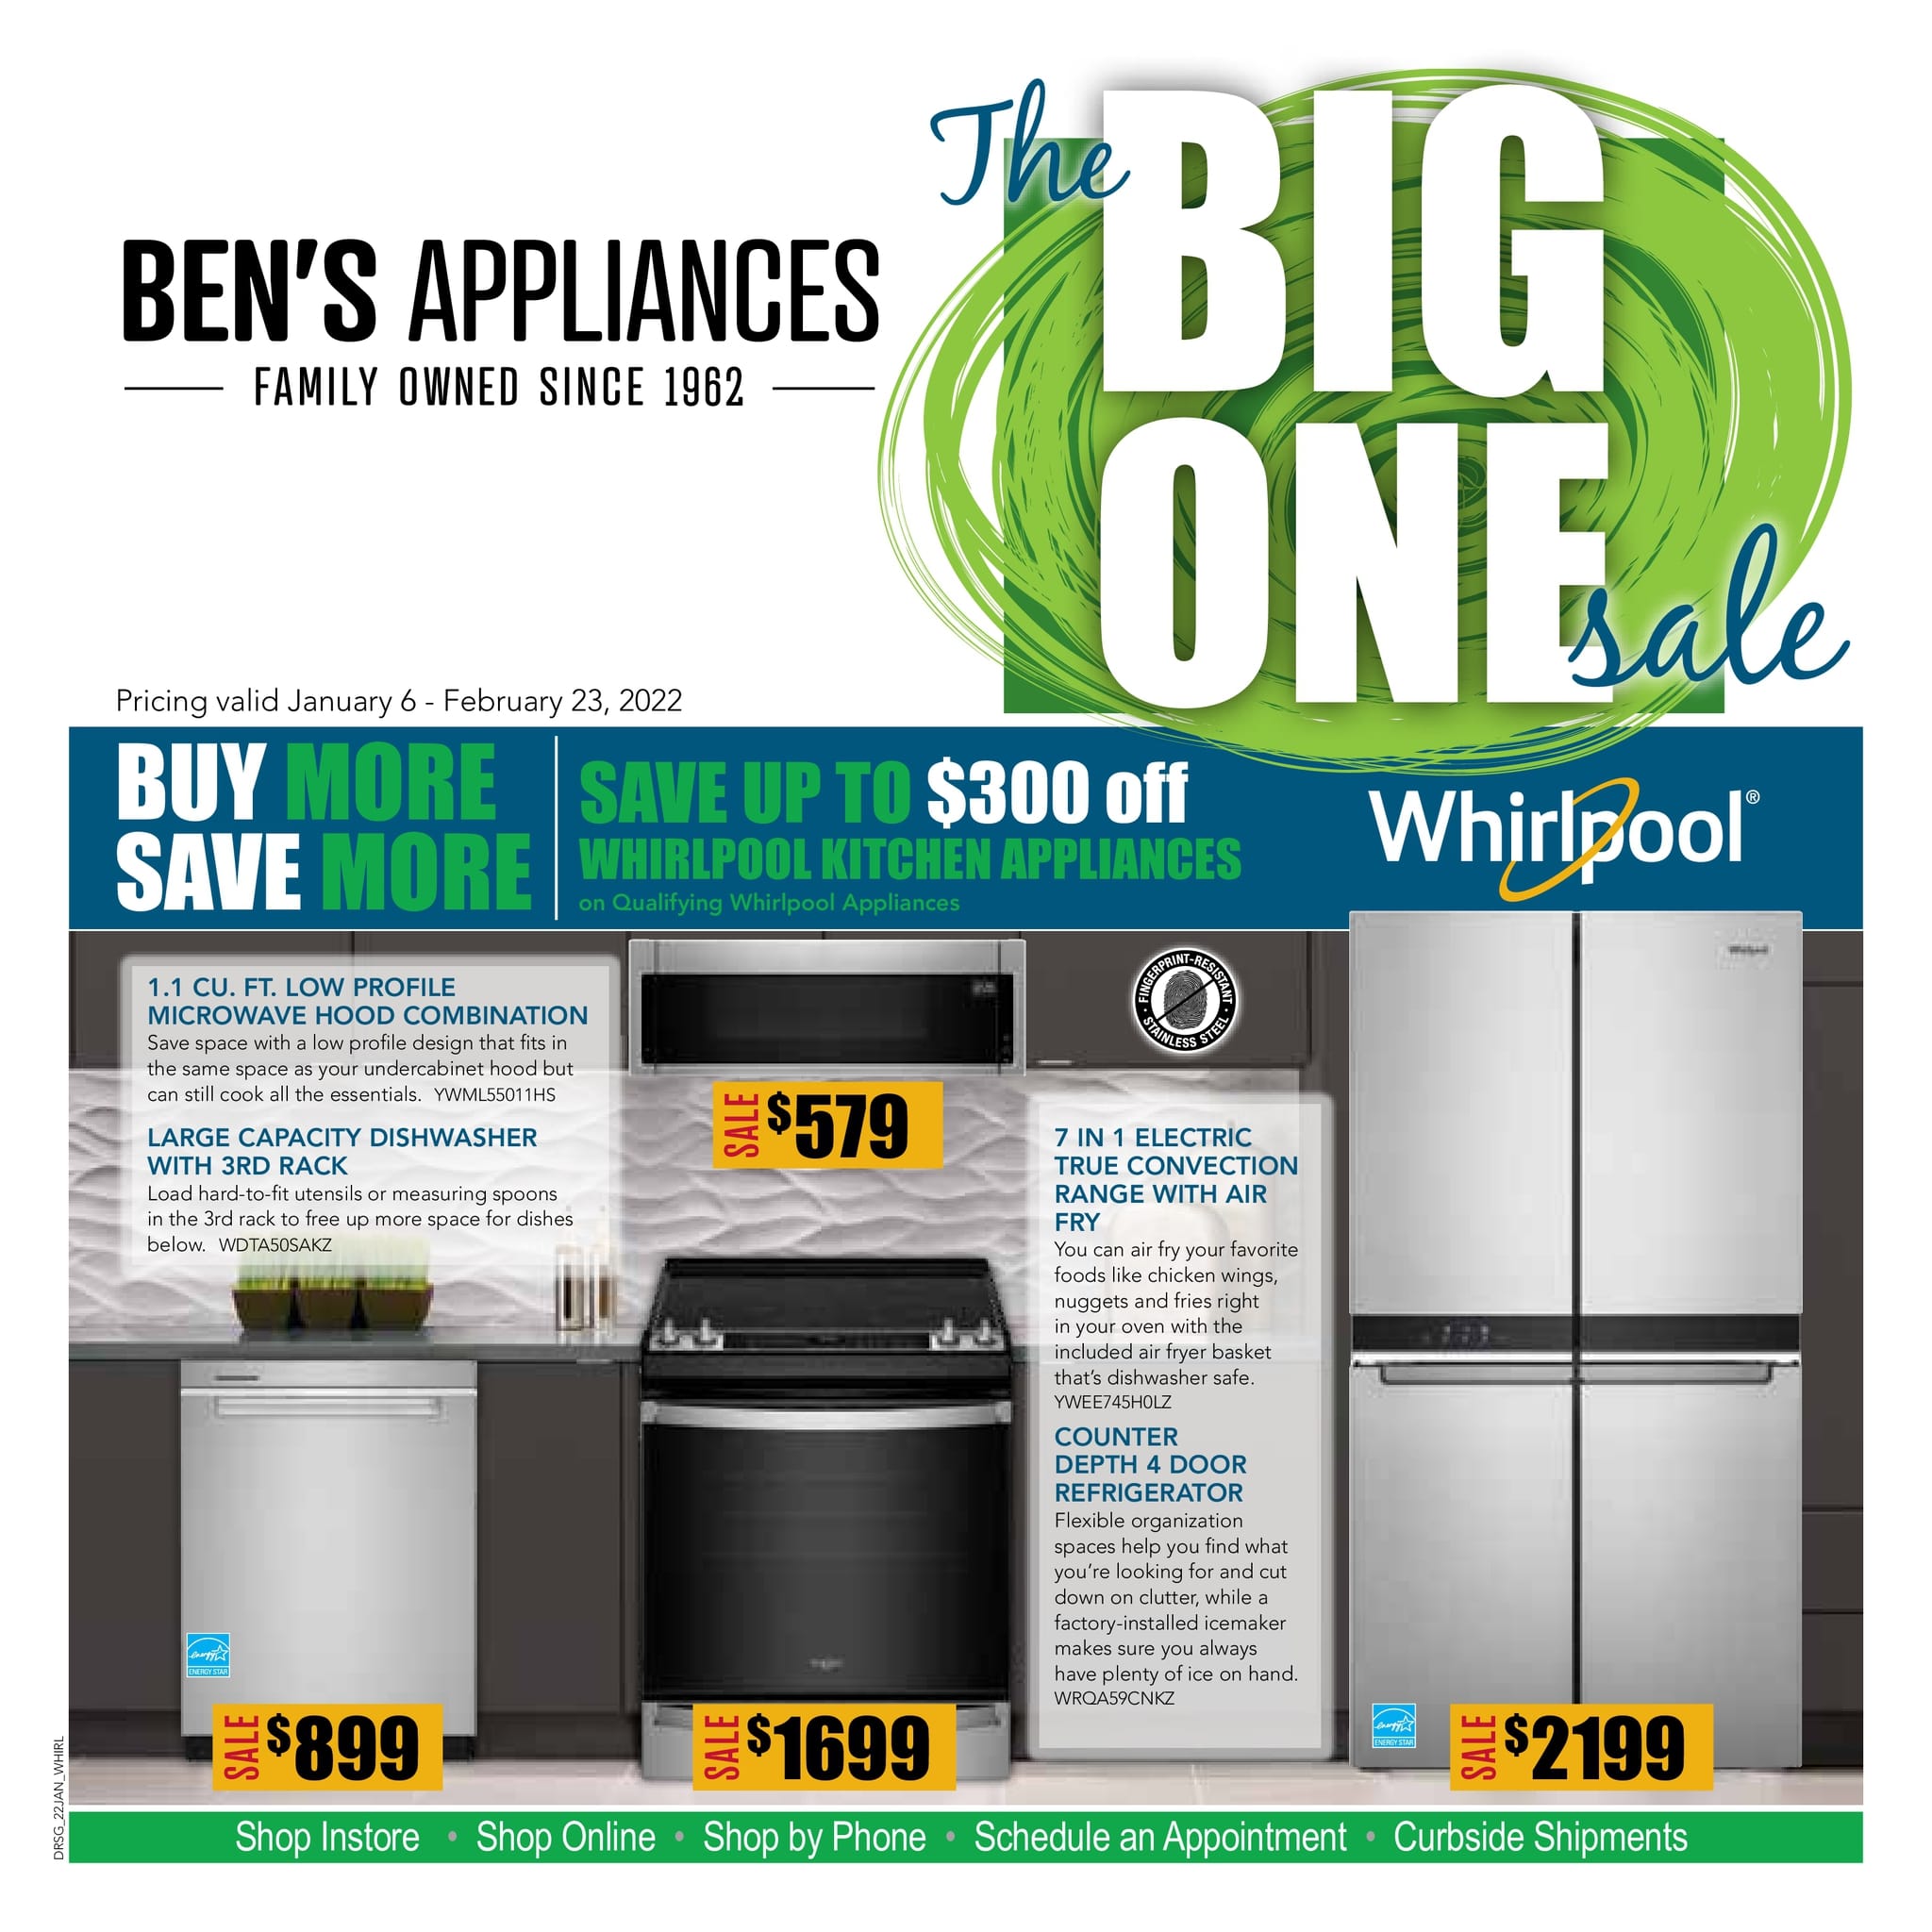 Ben's Appliances - Monthy Savings